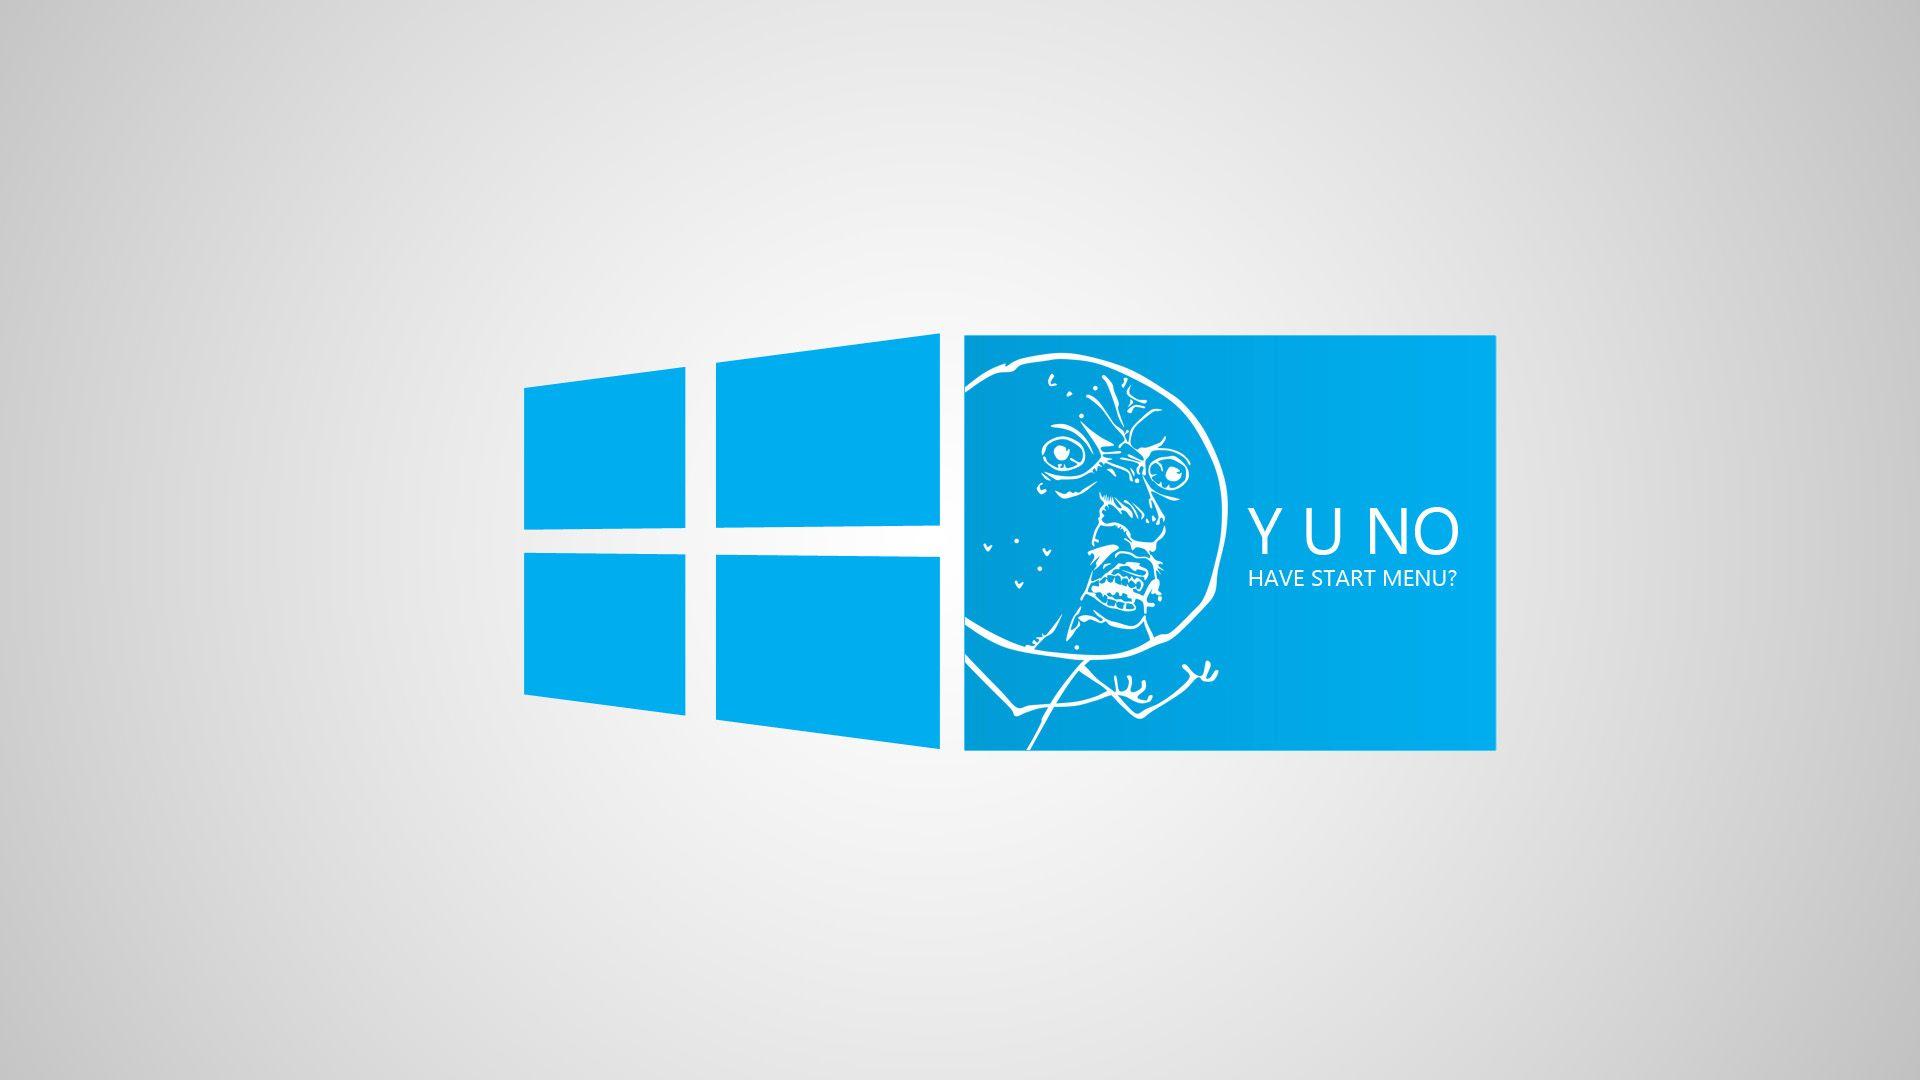 Funny Blue Windows 8 Meme wallpaper. brands and logos. Wallpaper